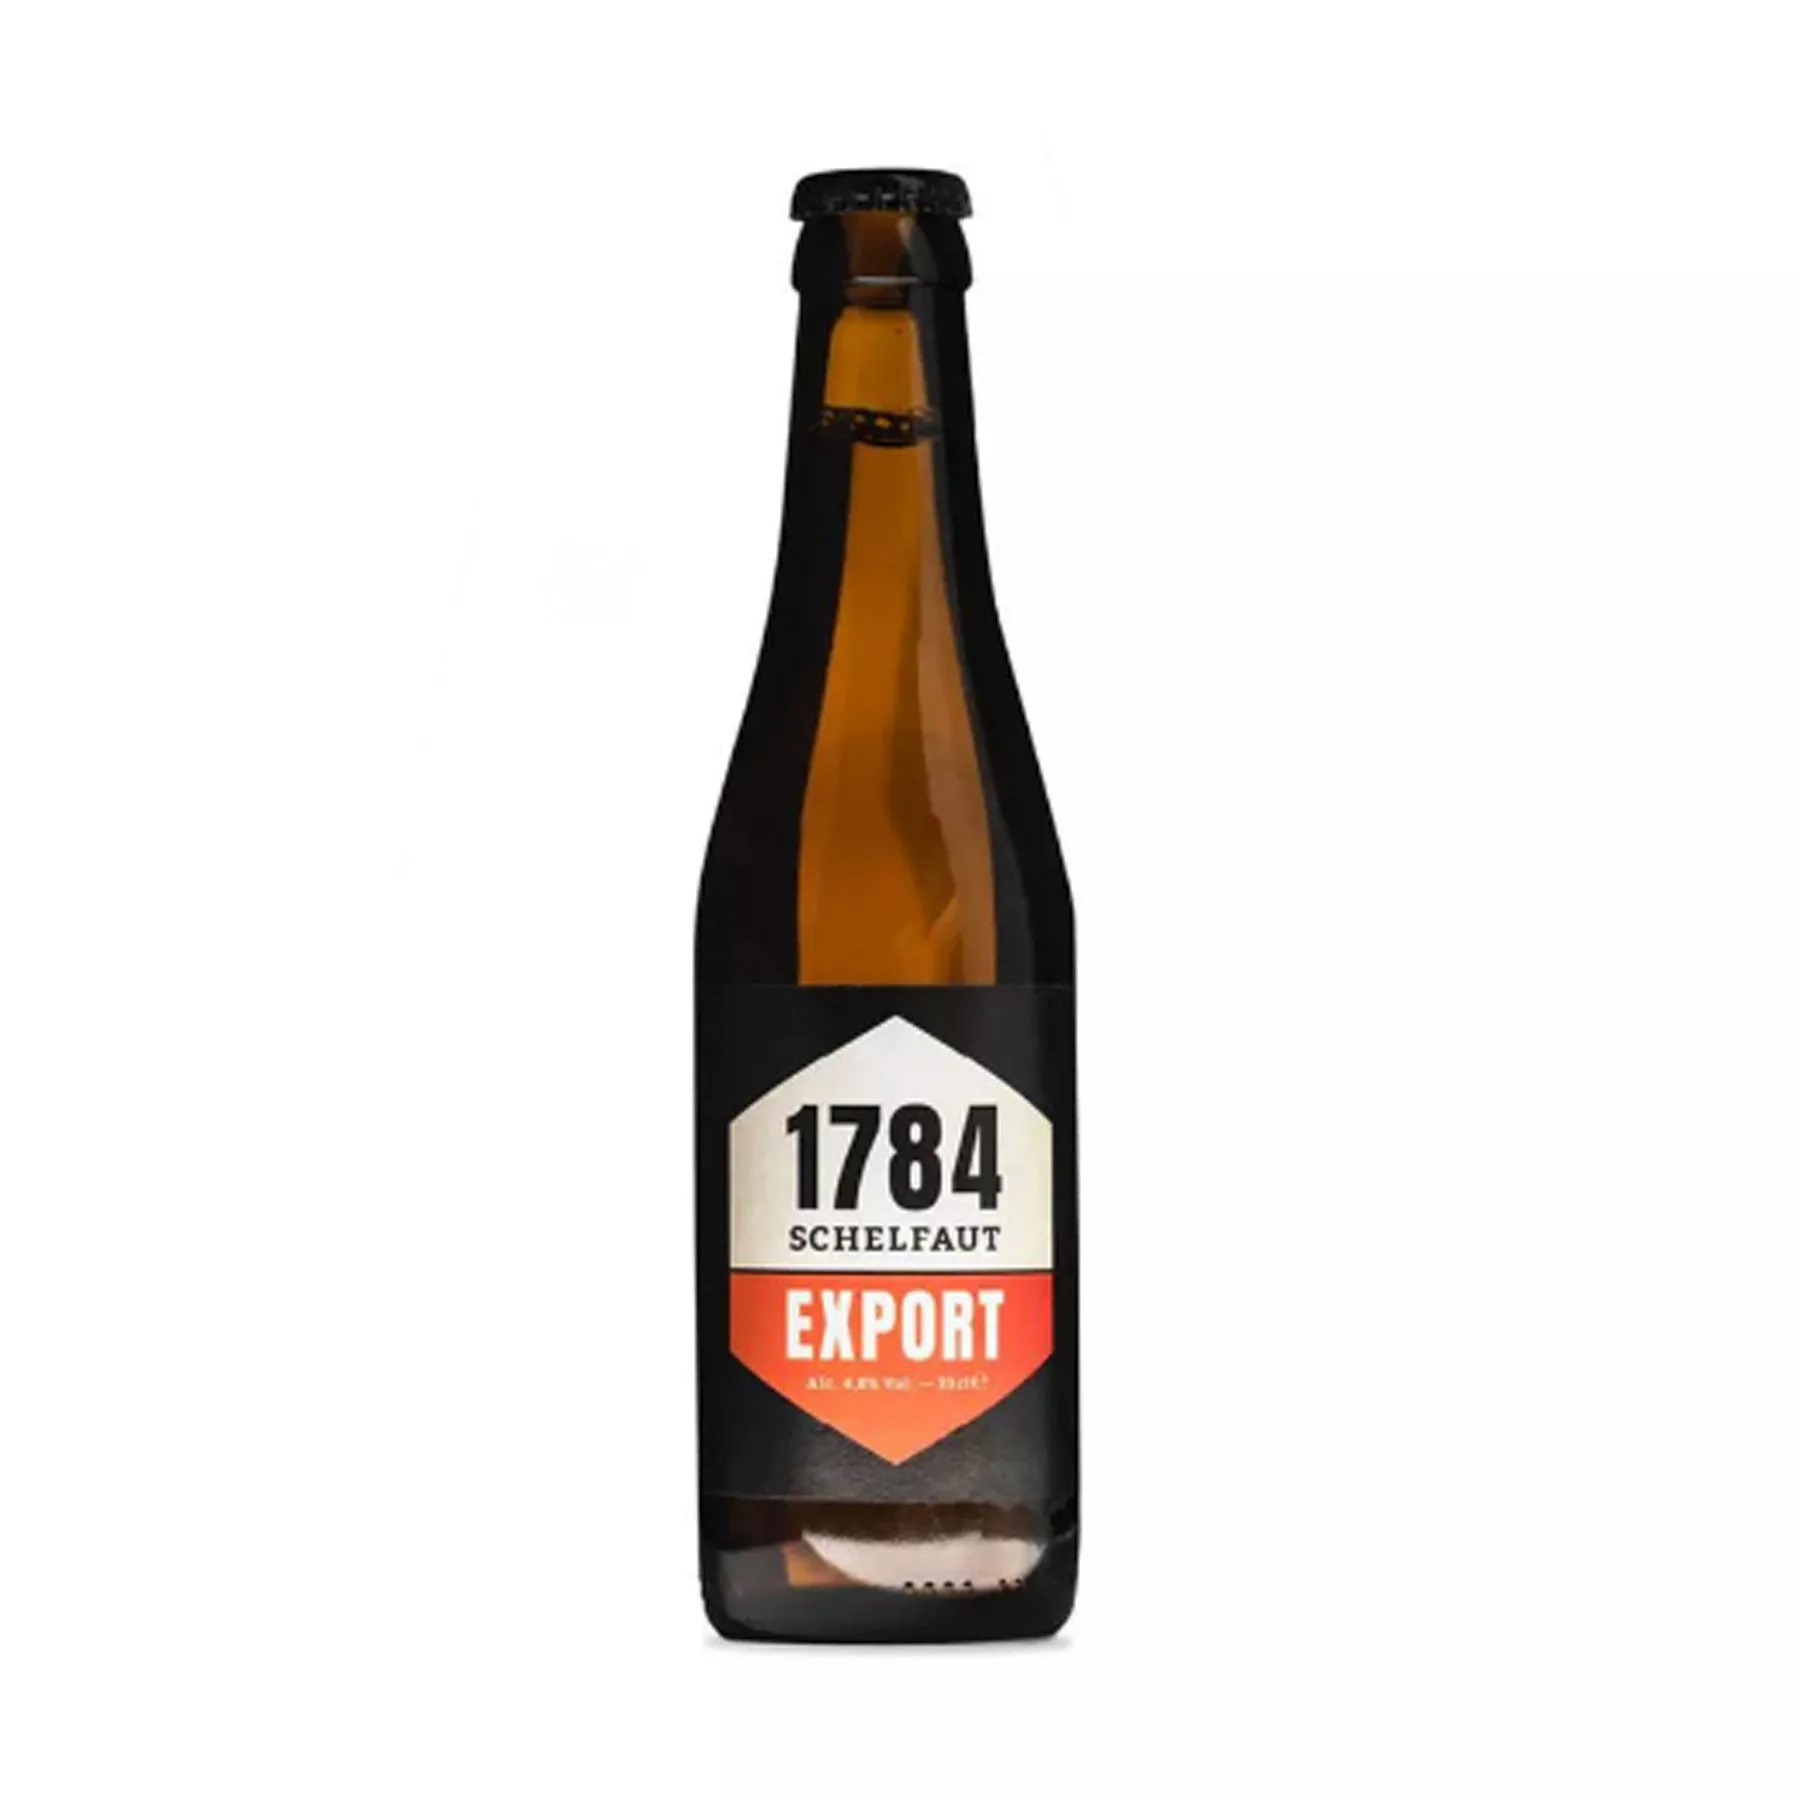 1784 Export - Brasserie Van Steenberge